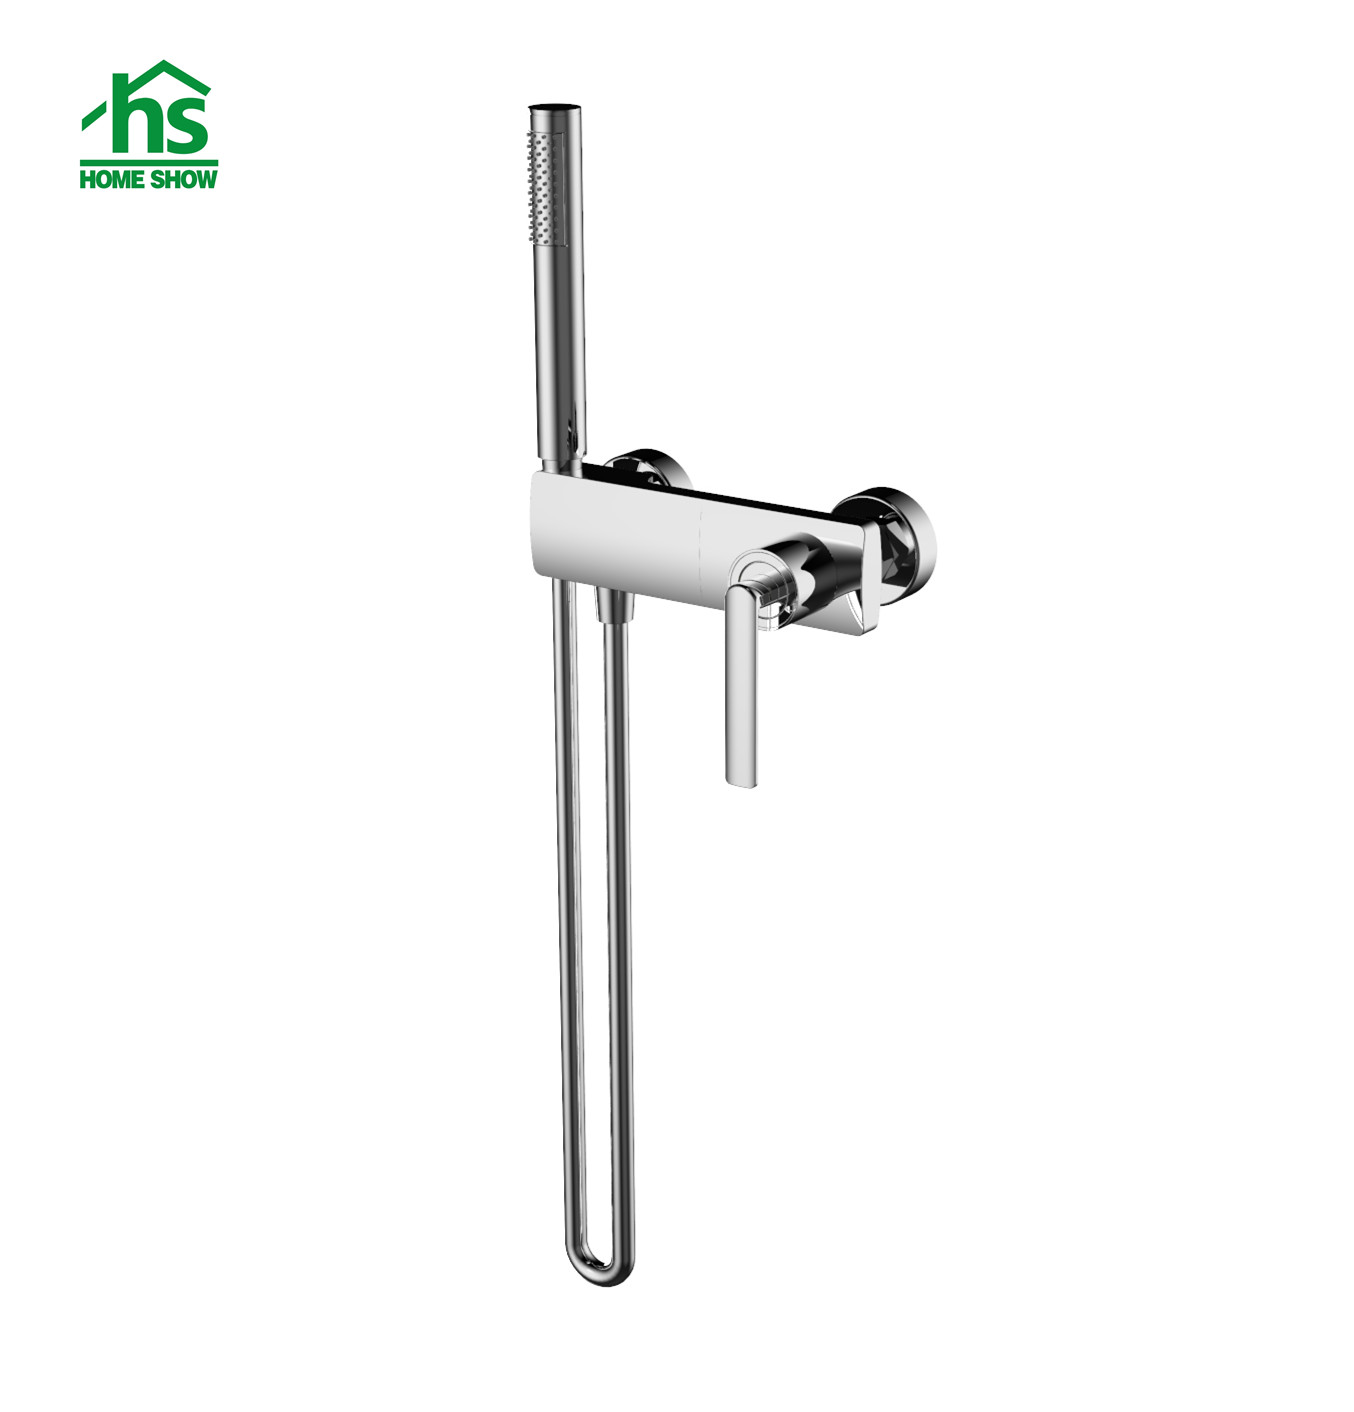 Factory OEM Chrome Brass Material 3 Function Hidden Spout Bathroom Shower Set D42 1003